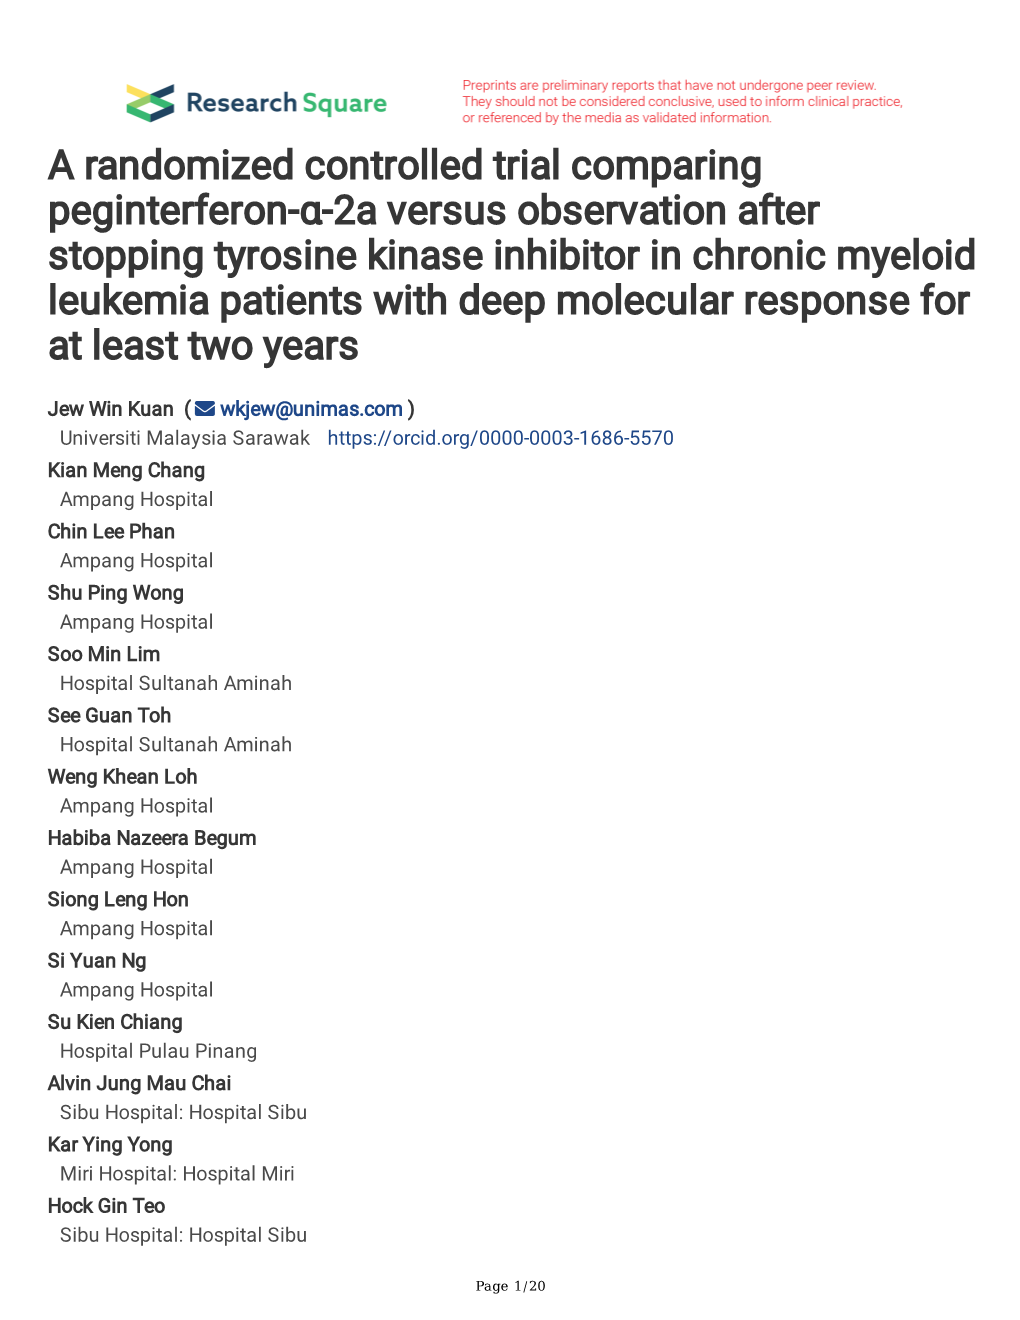 A Randomized Controlled Trial Comparing Peginterferon-Α-2A